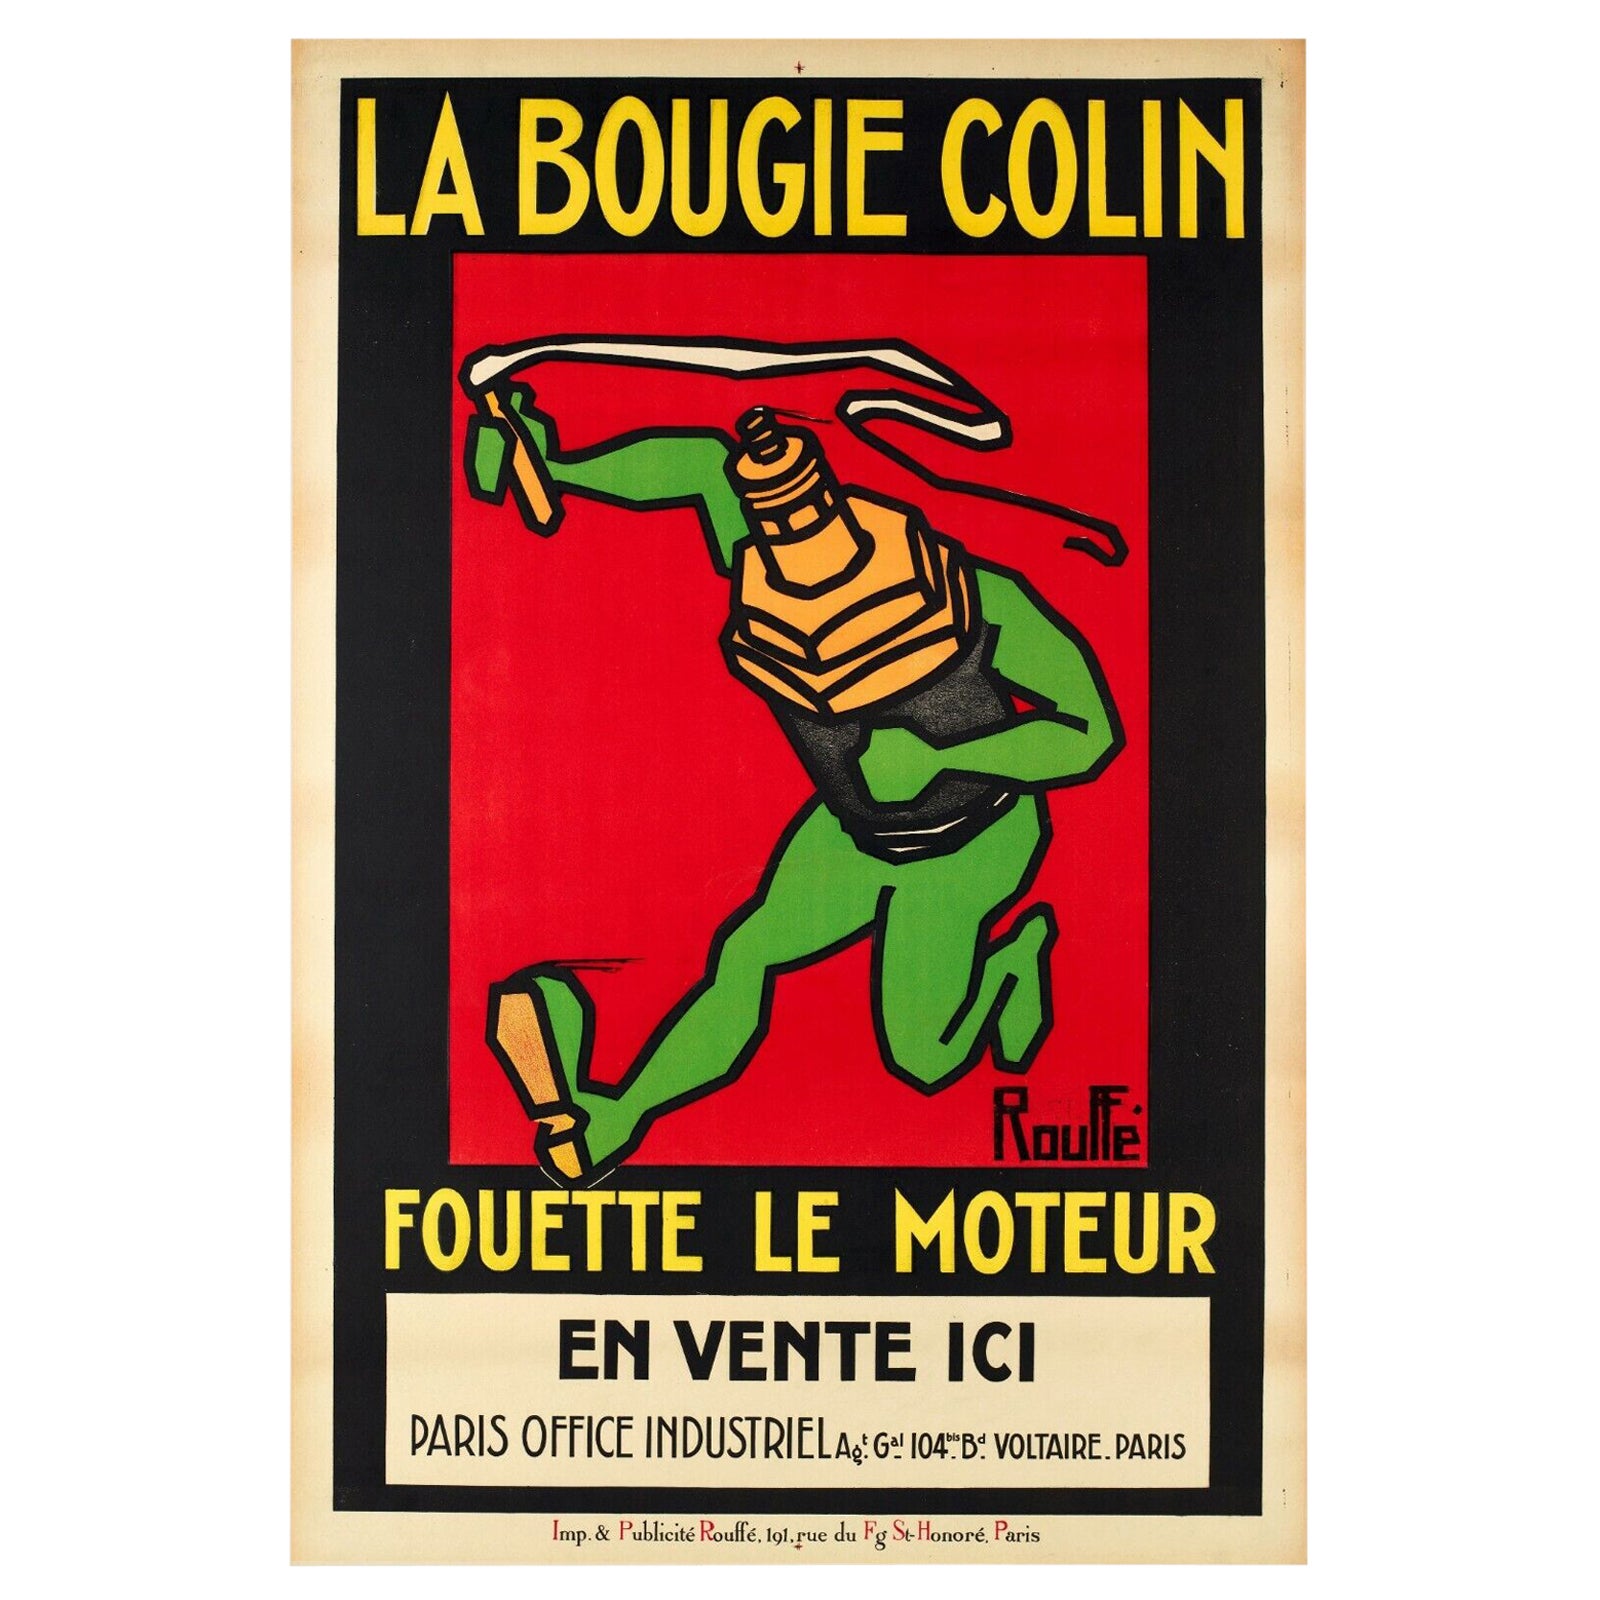 Original Vintage Poster-Rouffé-Colin Kerze-Auto-Motor, 1930